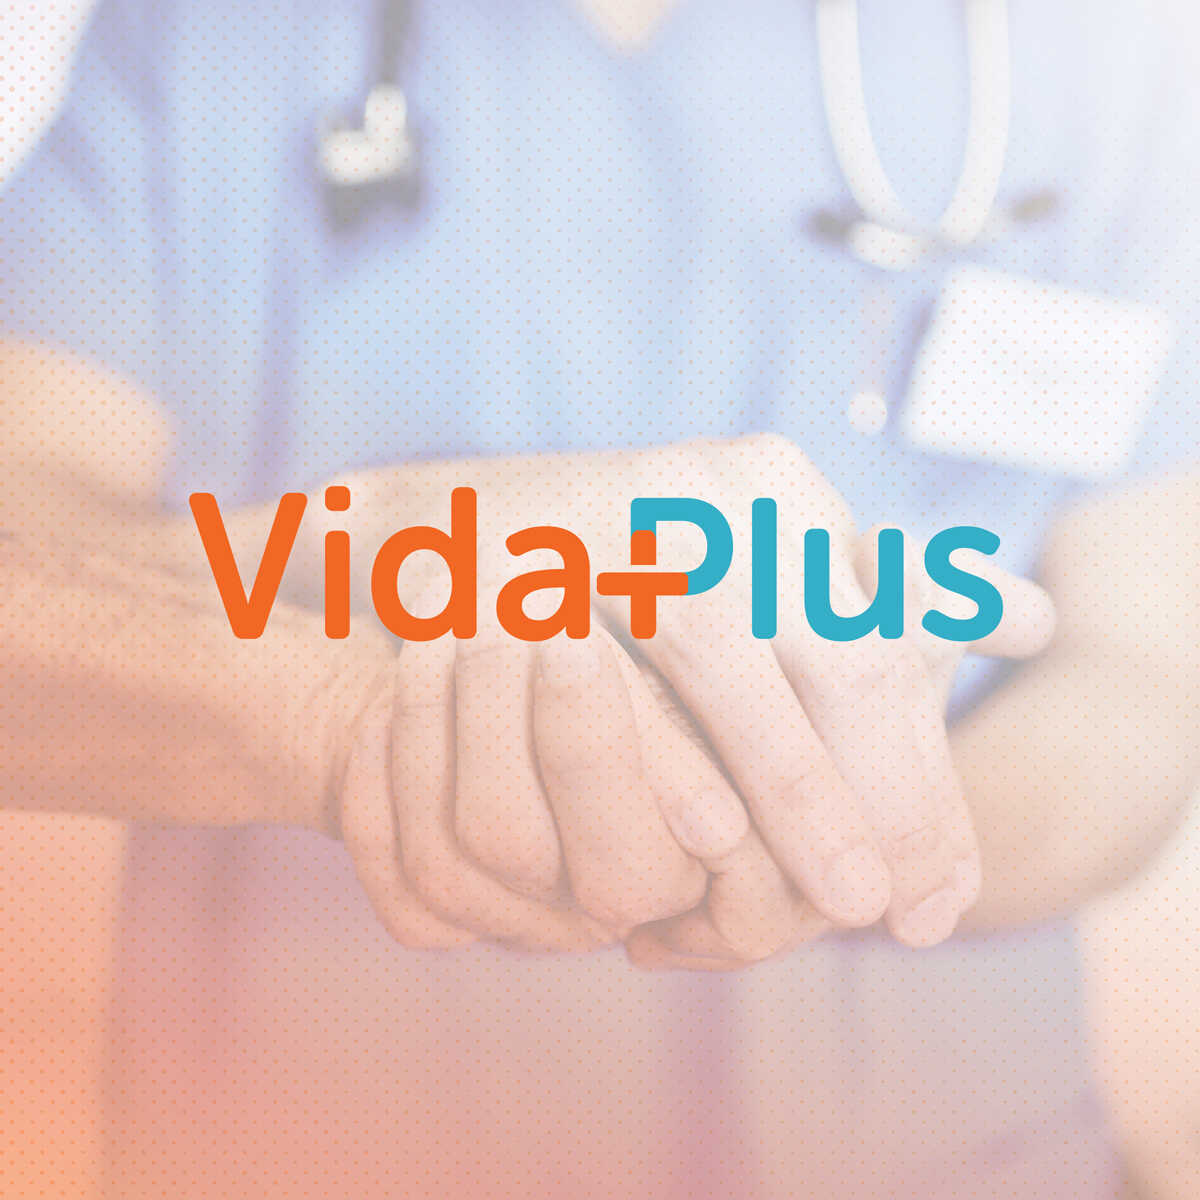 VidaPlus logo and graphic